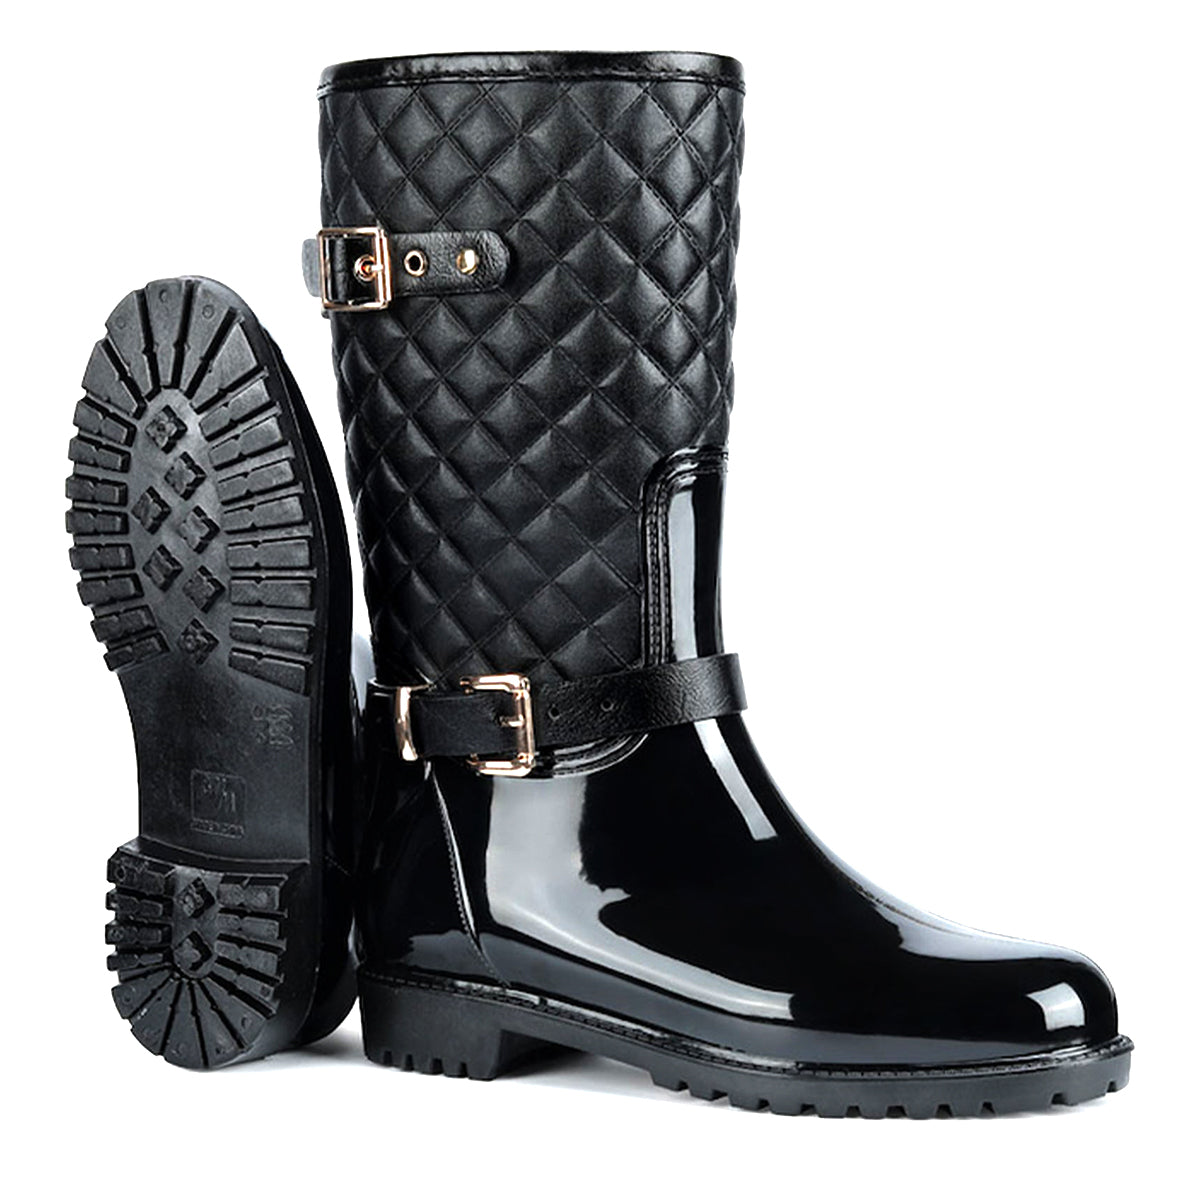 Calypso Fashion Tall Gumboots Waterproof Boots